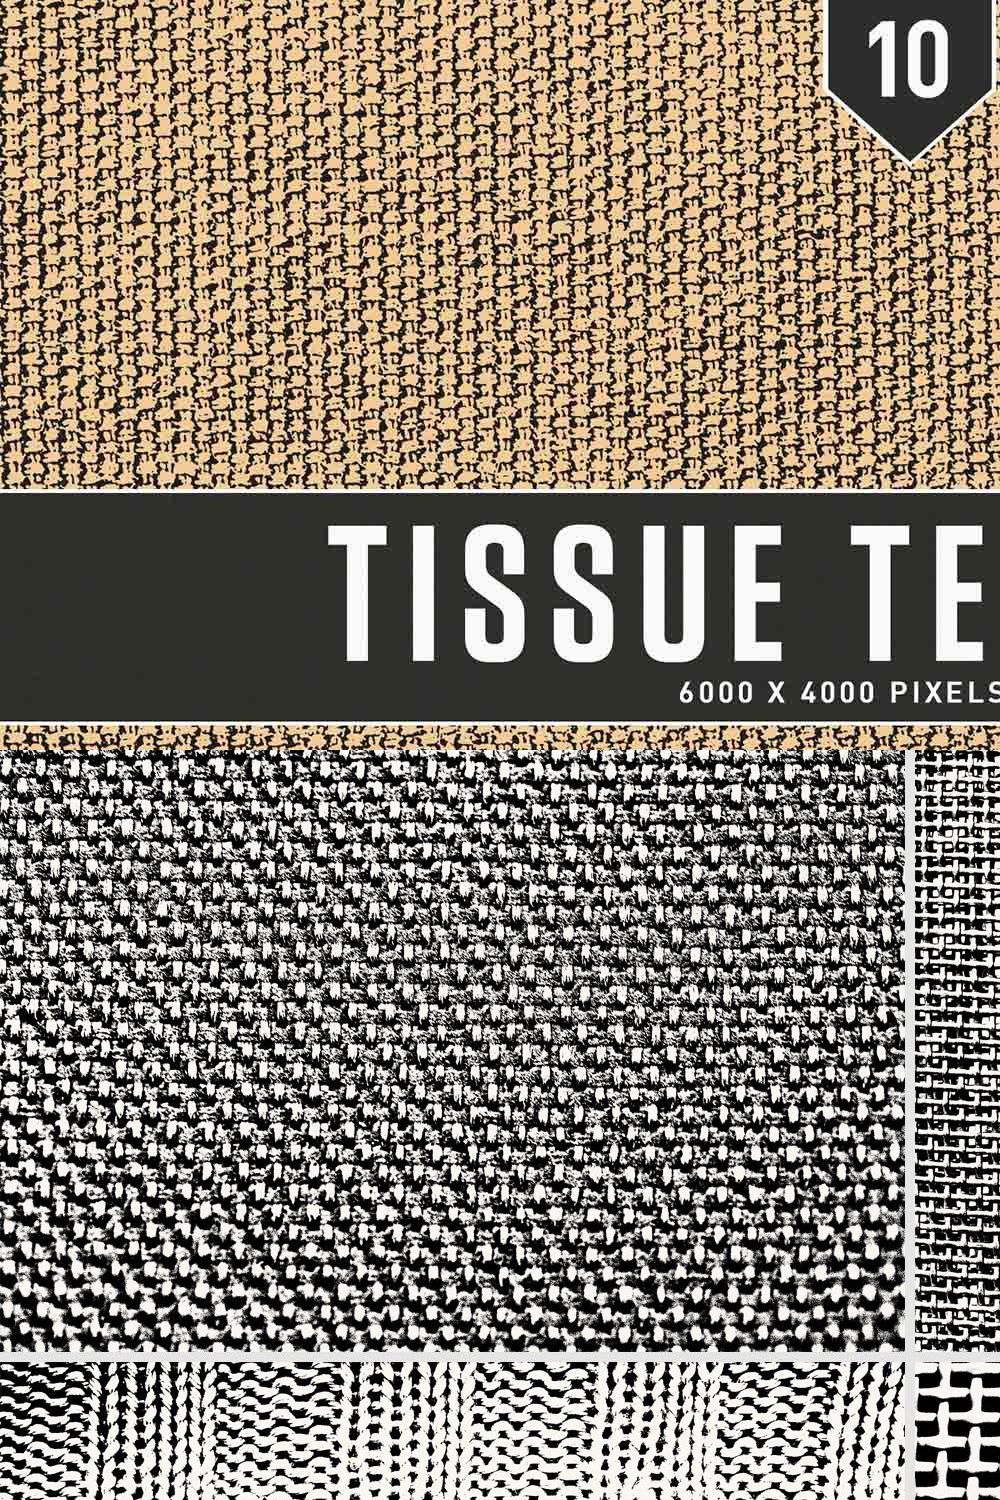 Tissue Textures pinterest preview image.